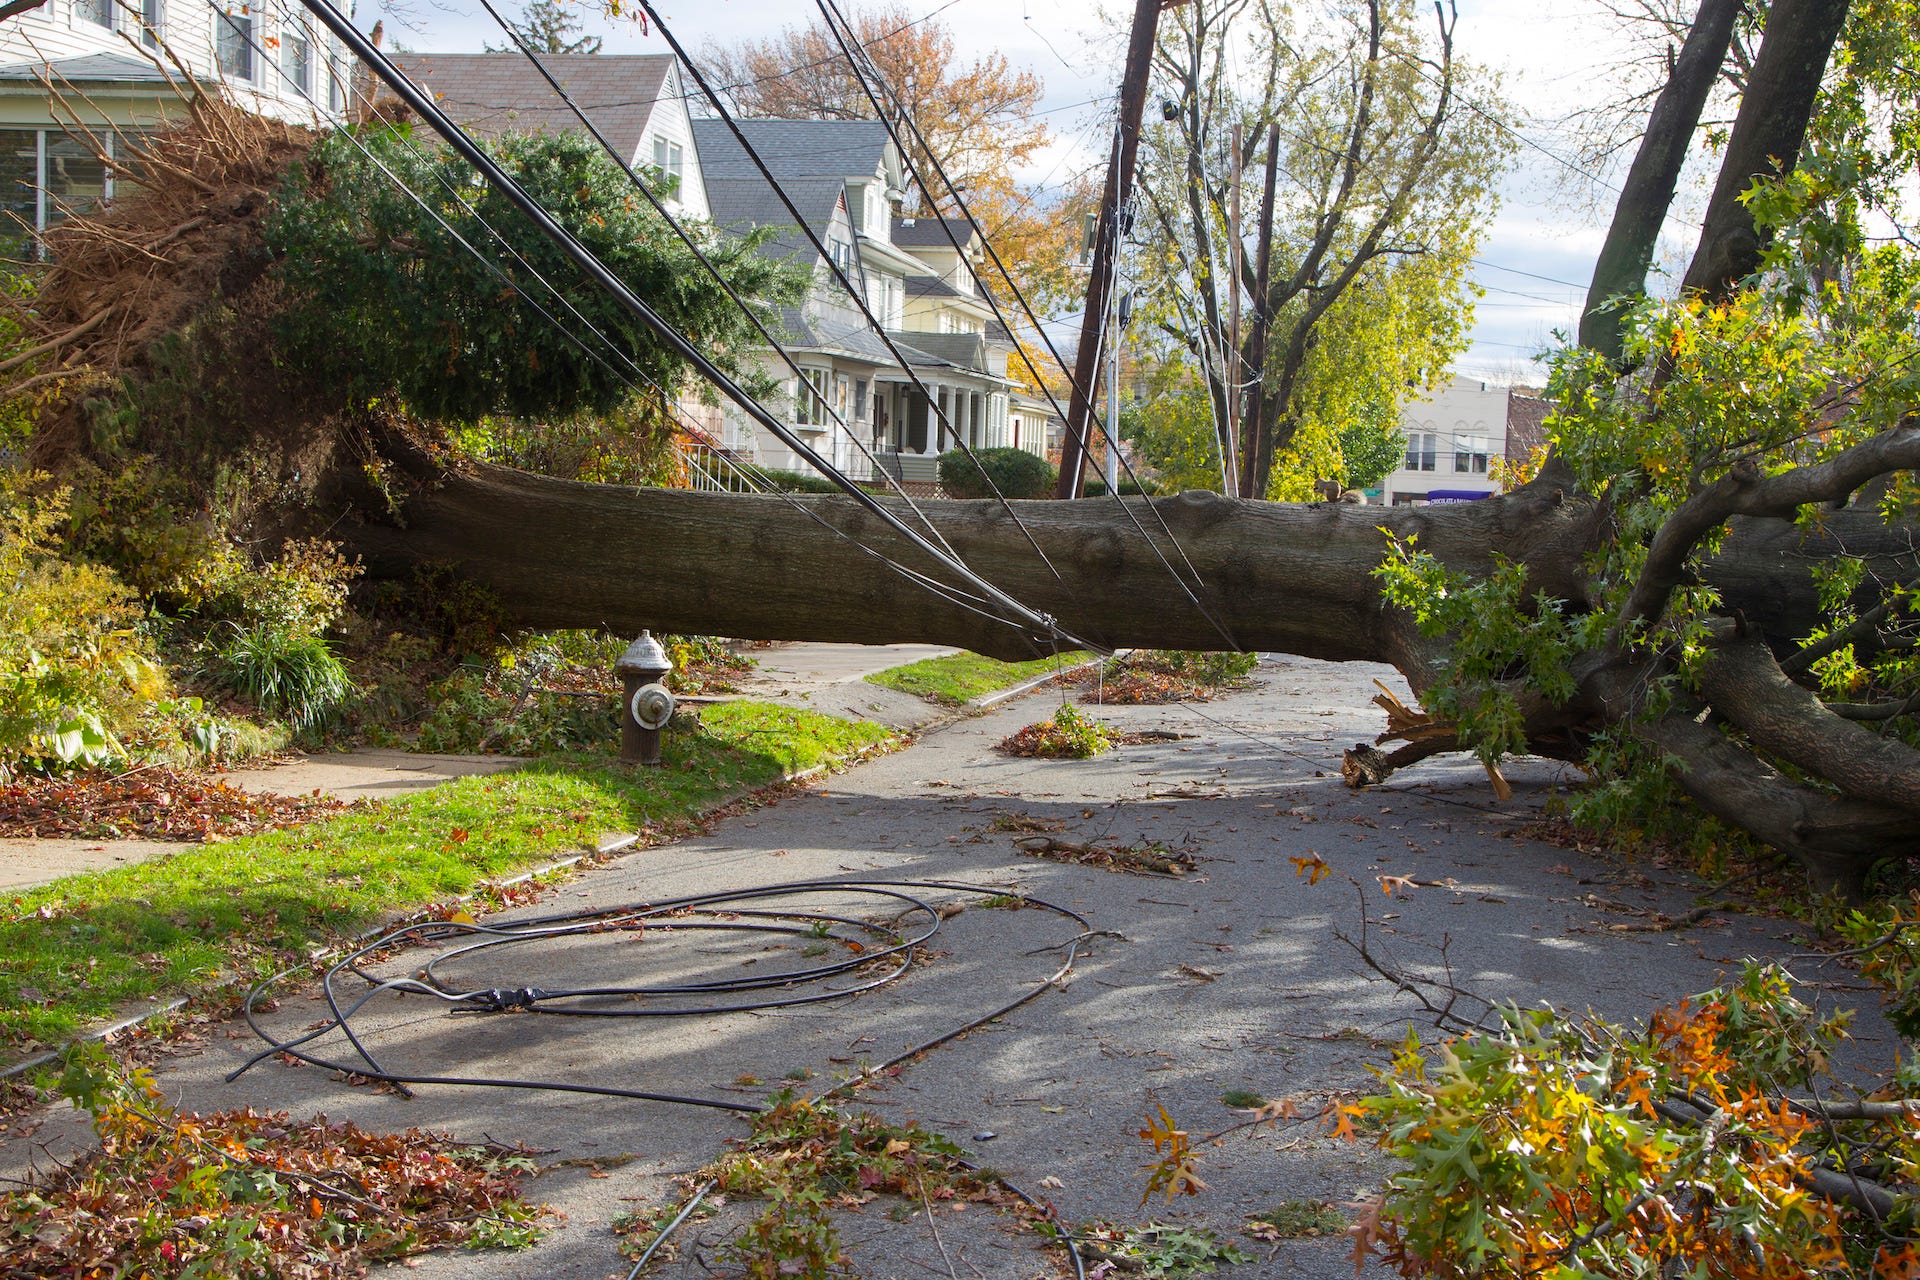 Fallen tree on power lines and road in residential neighborhood.